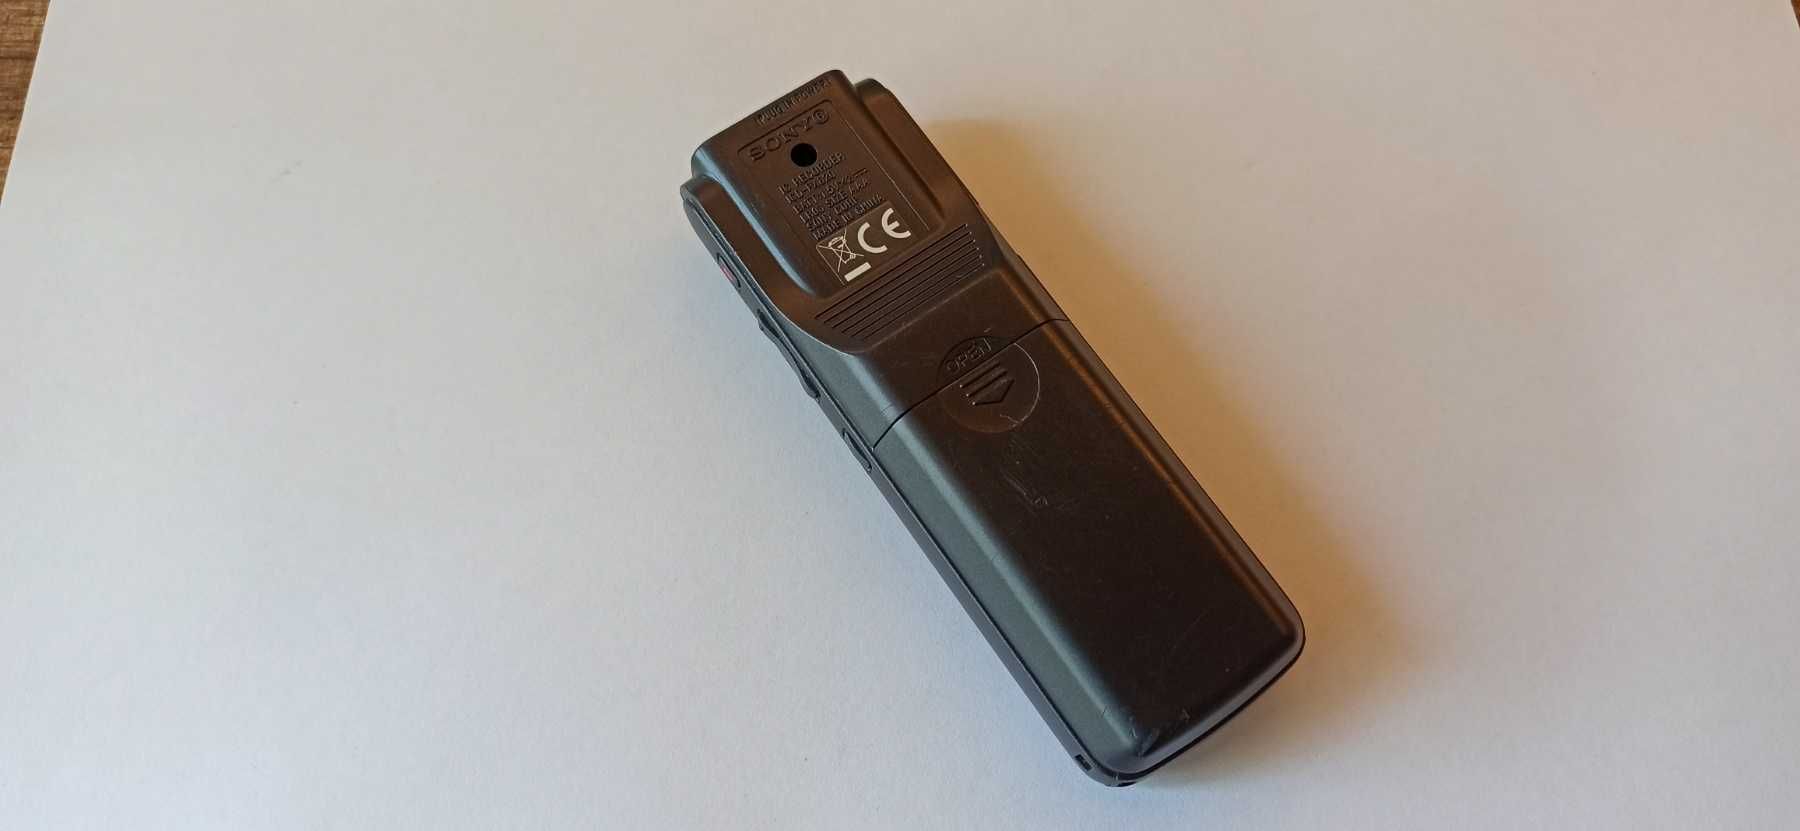 Диктофон Sony ICD-PX820